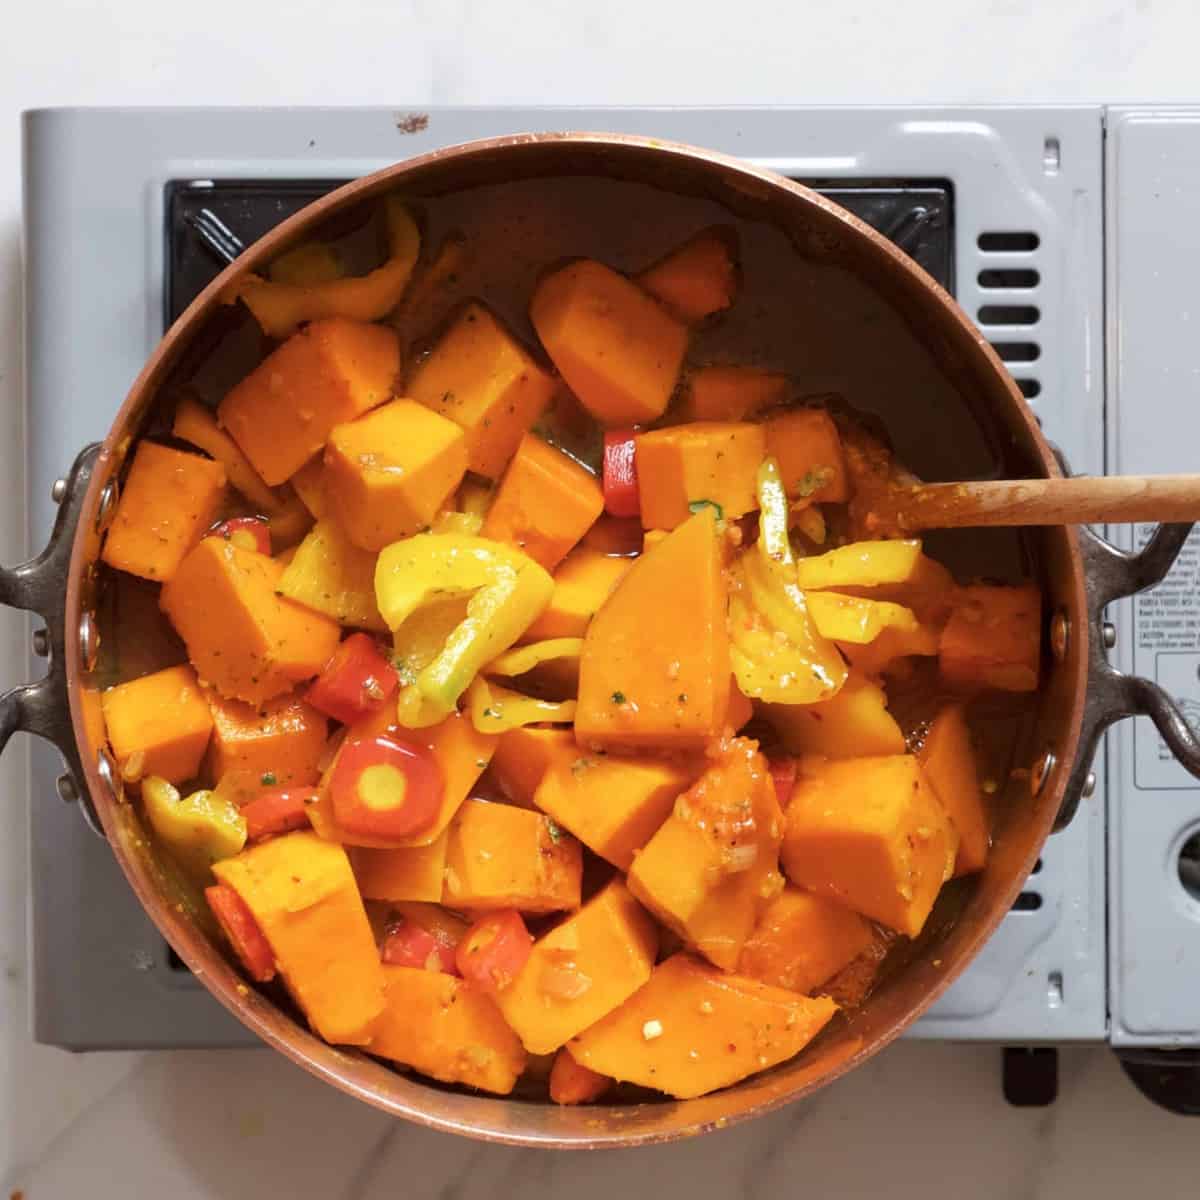 Making pumpkin soup in a pot